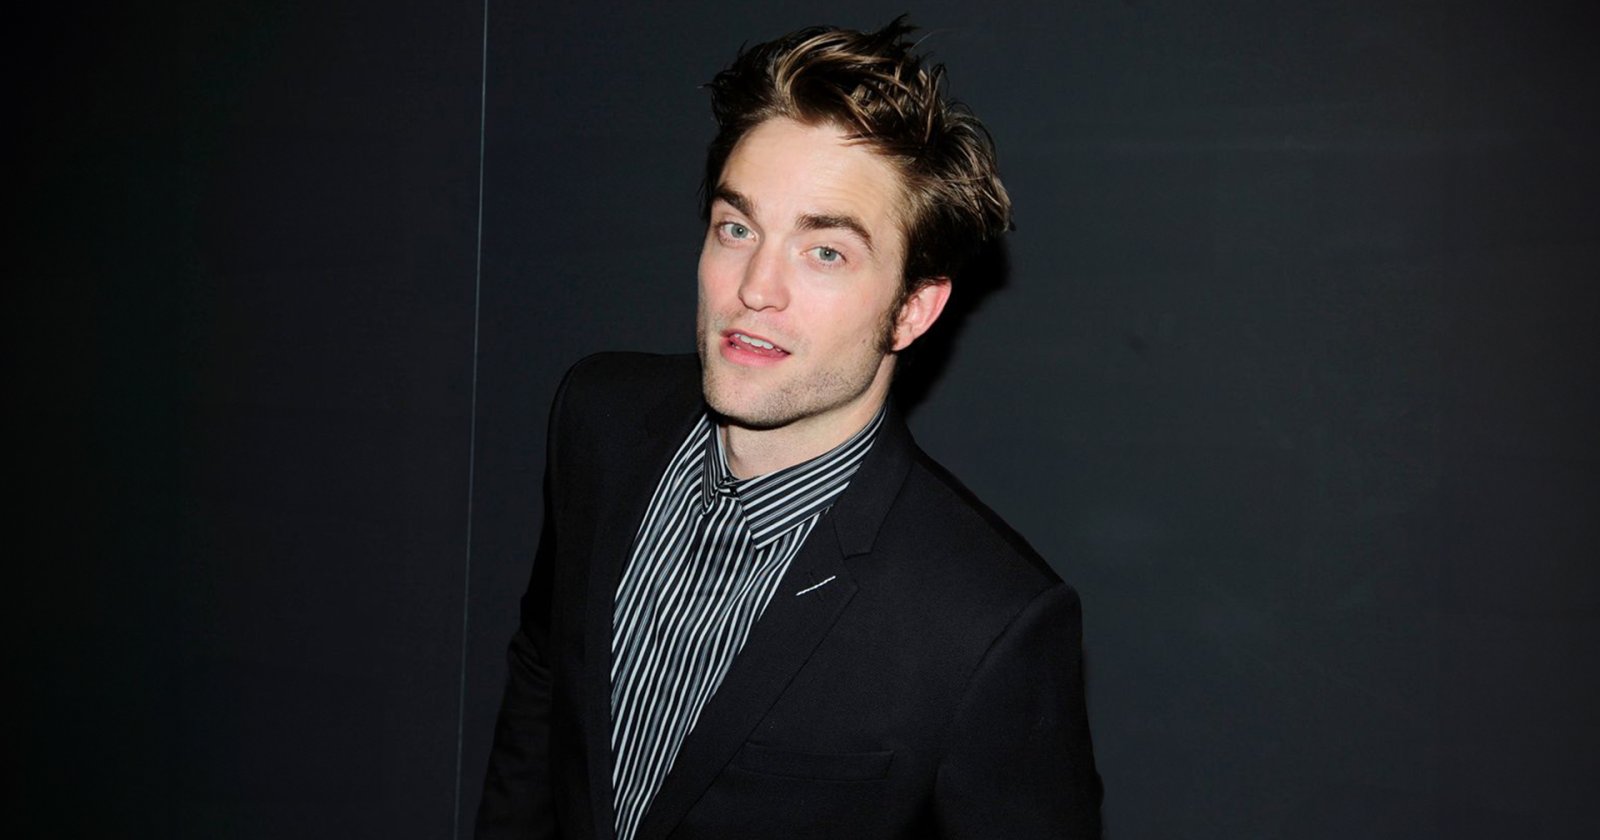 Robert Pattinson เปิดใจ สิ่งที่ไม่ชอบที่สุดในฮอลลีวูดคือ การถูกจดจำจากบทบาทแย่ ๆ